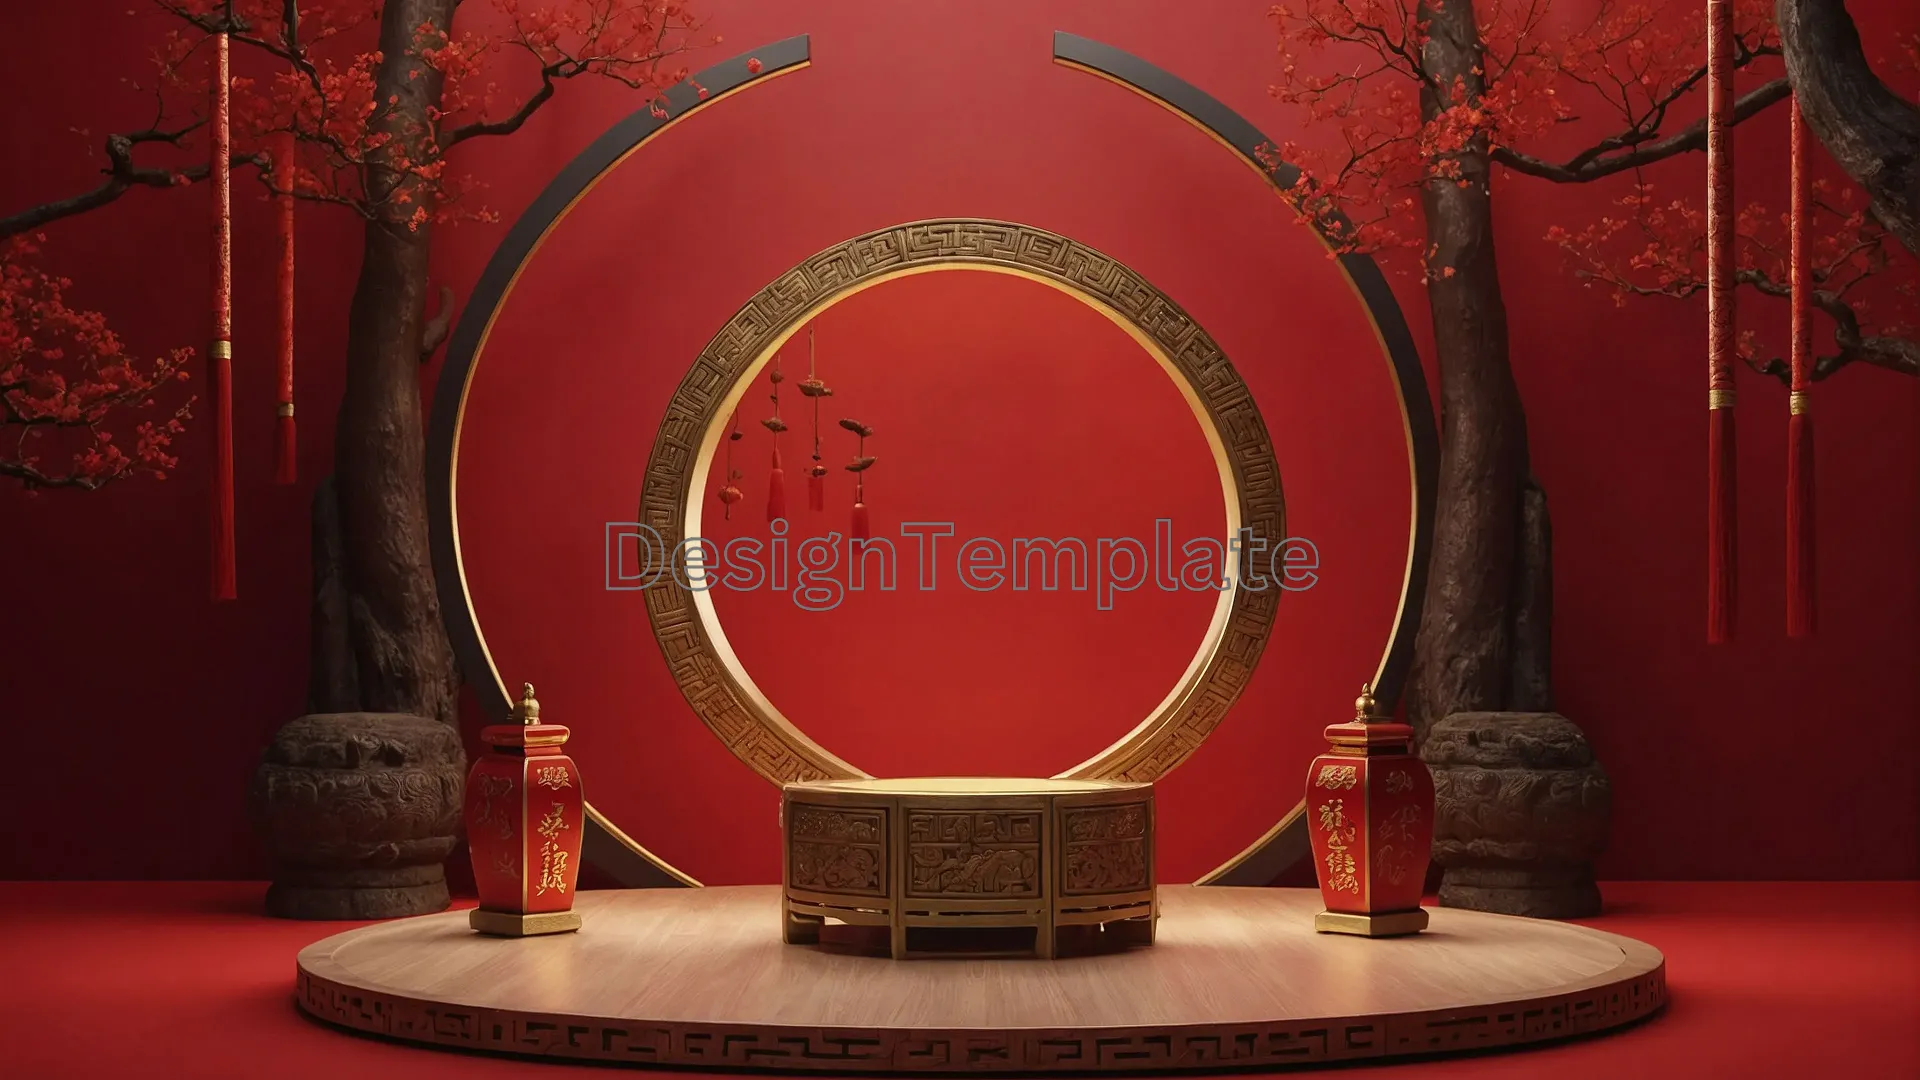 Celestial Portal Podium Red and Gold Scene Image